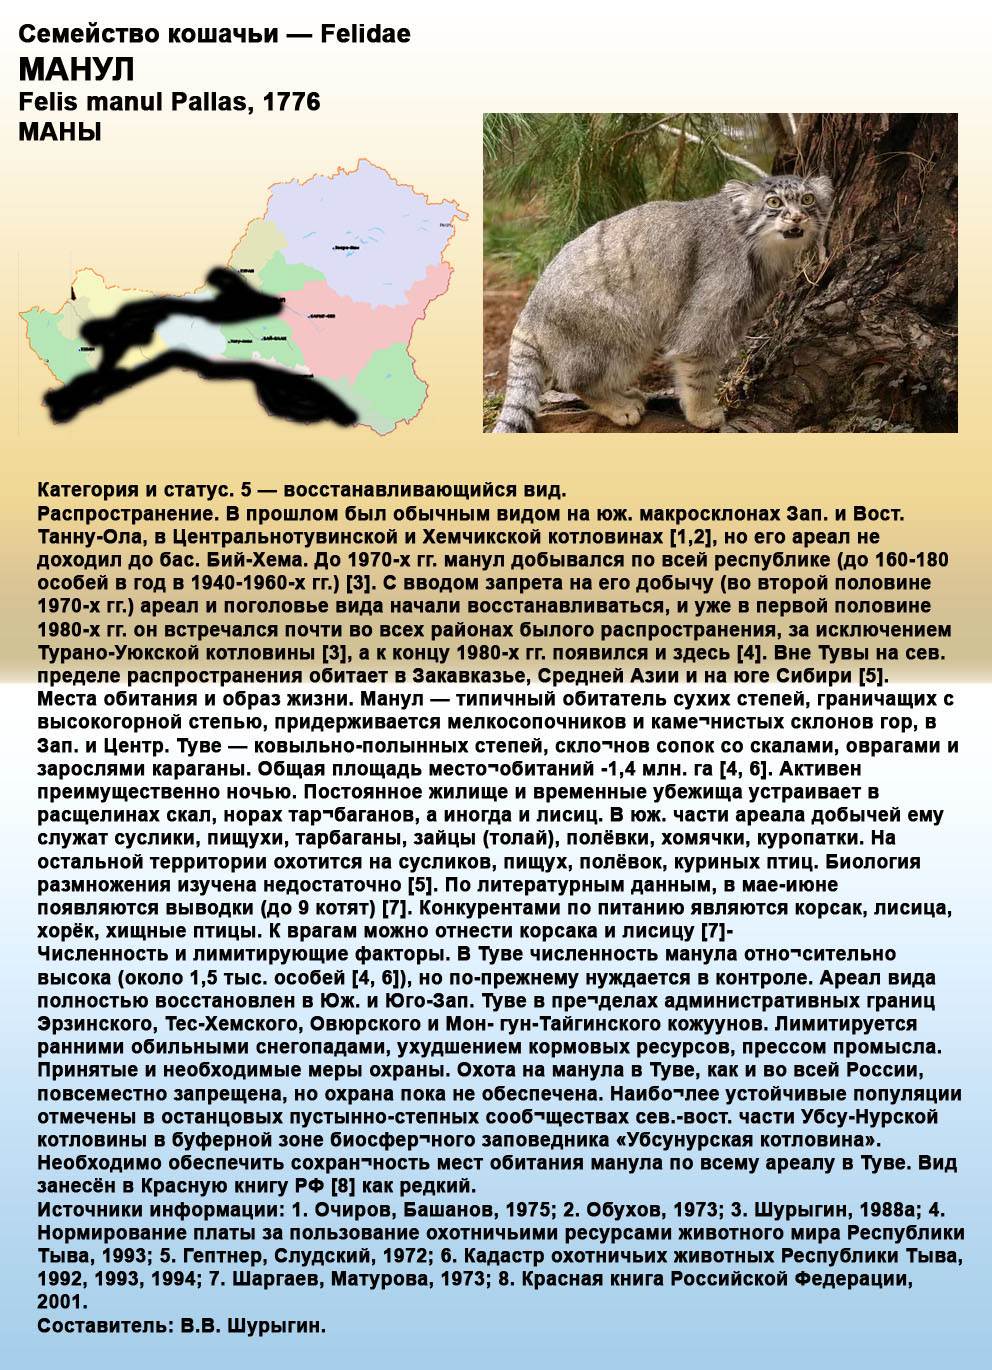 26 пород кошек на грани исчезновения - zefirka